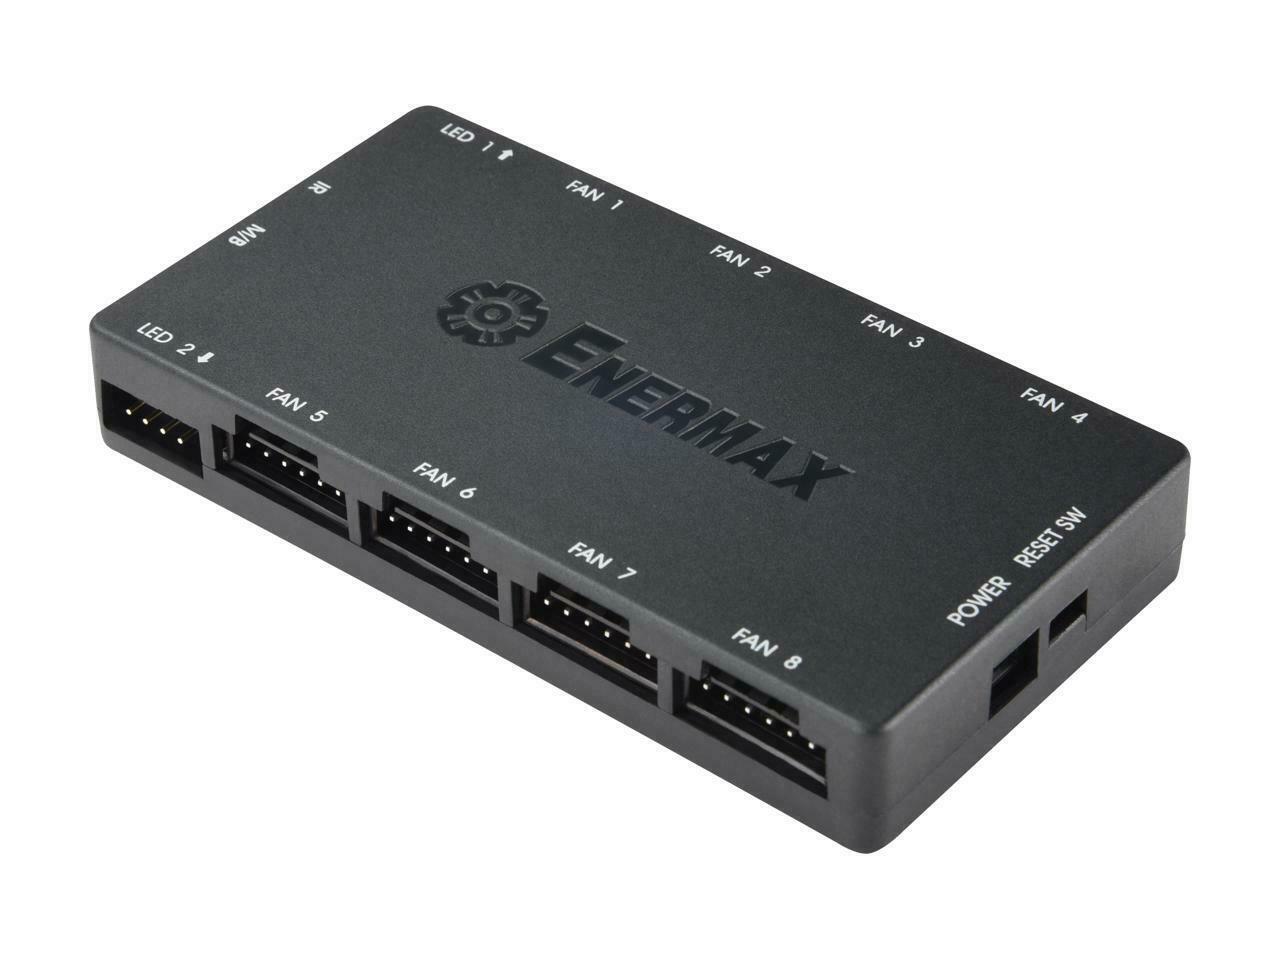 Enermax RGB 3-in 1 Remote Control Box